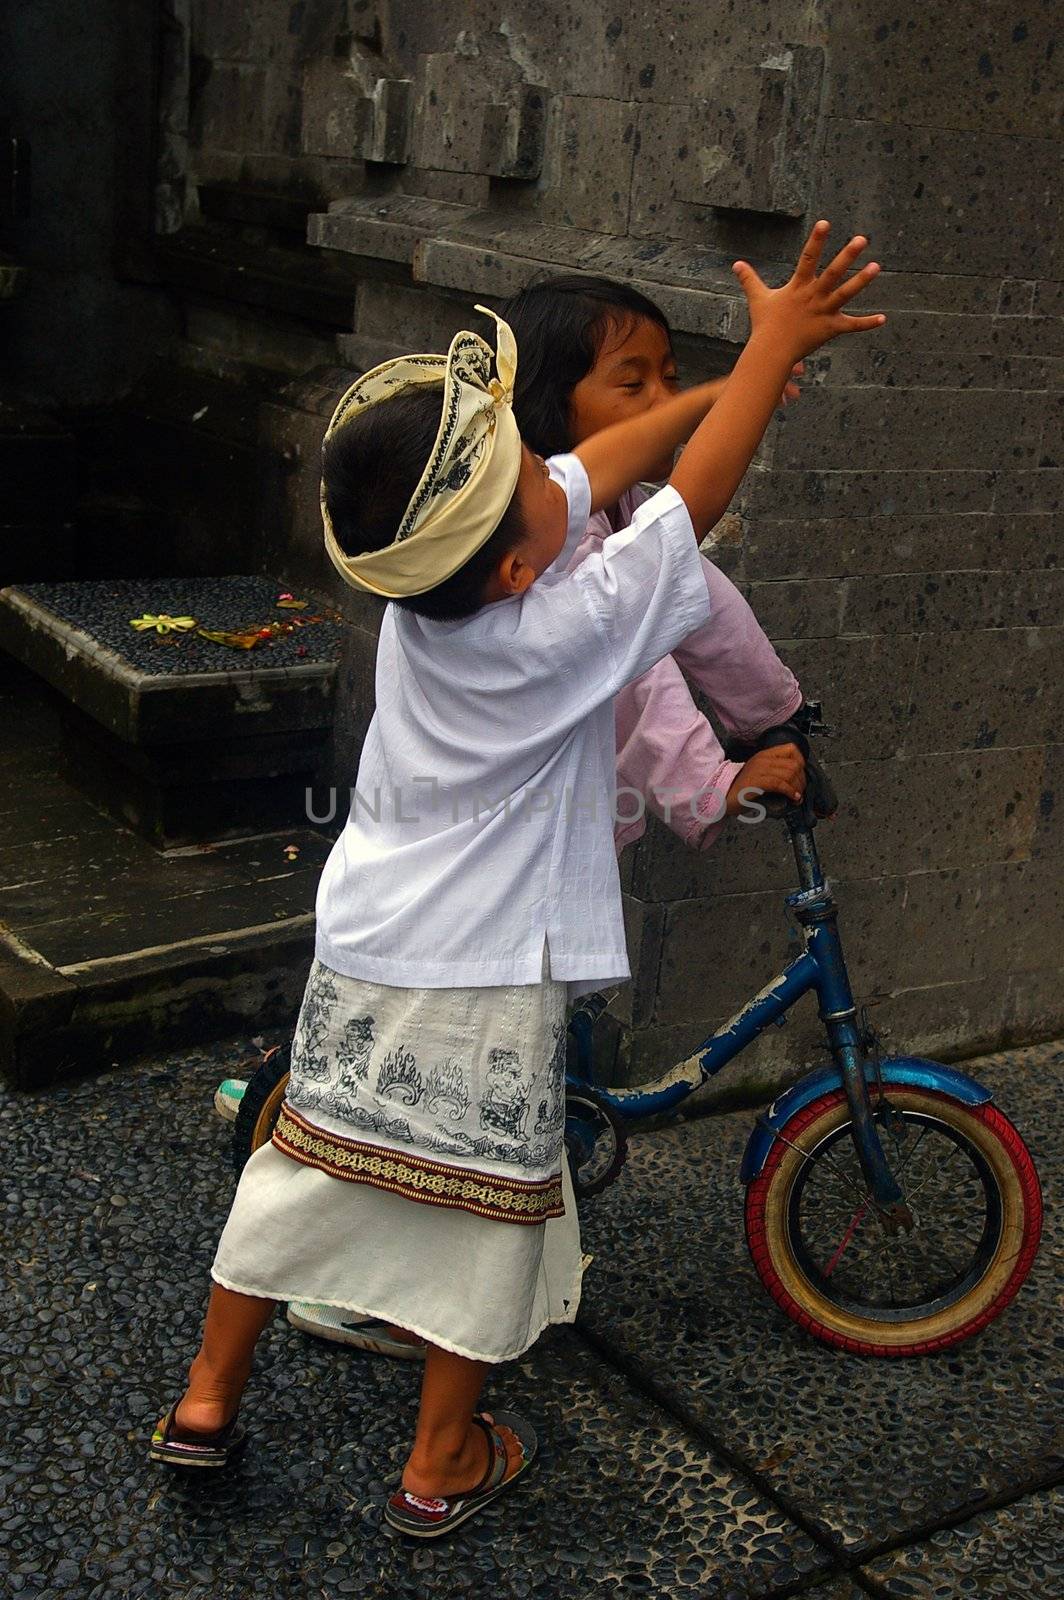 Balinese children playing in the street, Jimbaran, Bali, Indonesia.